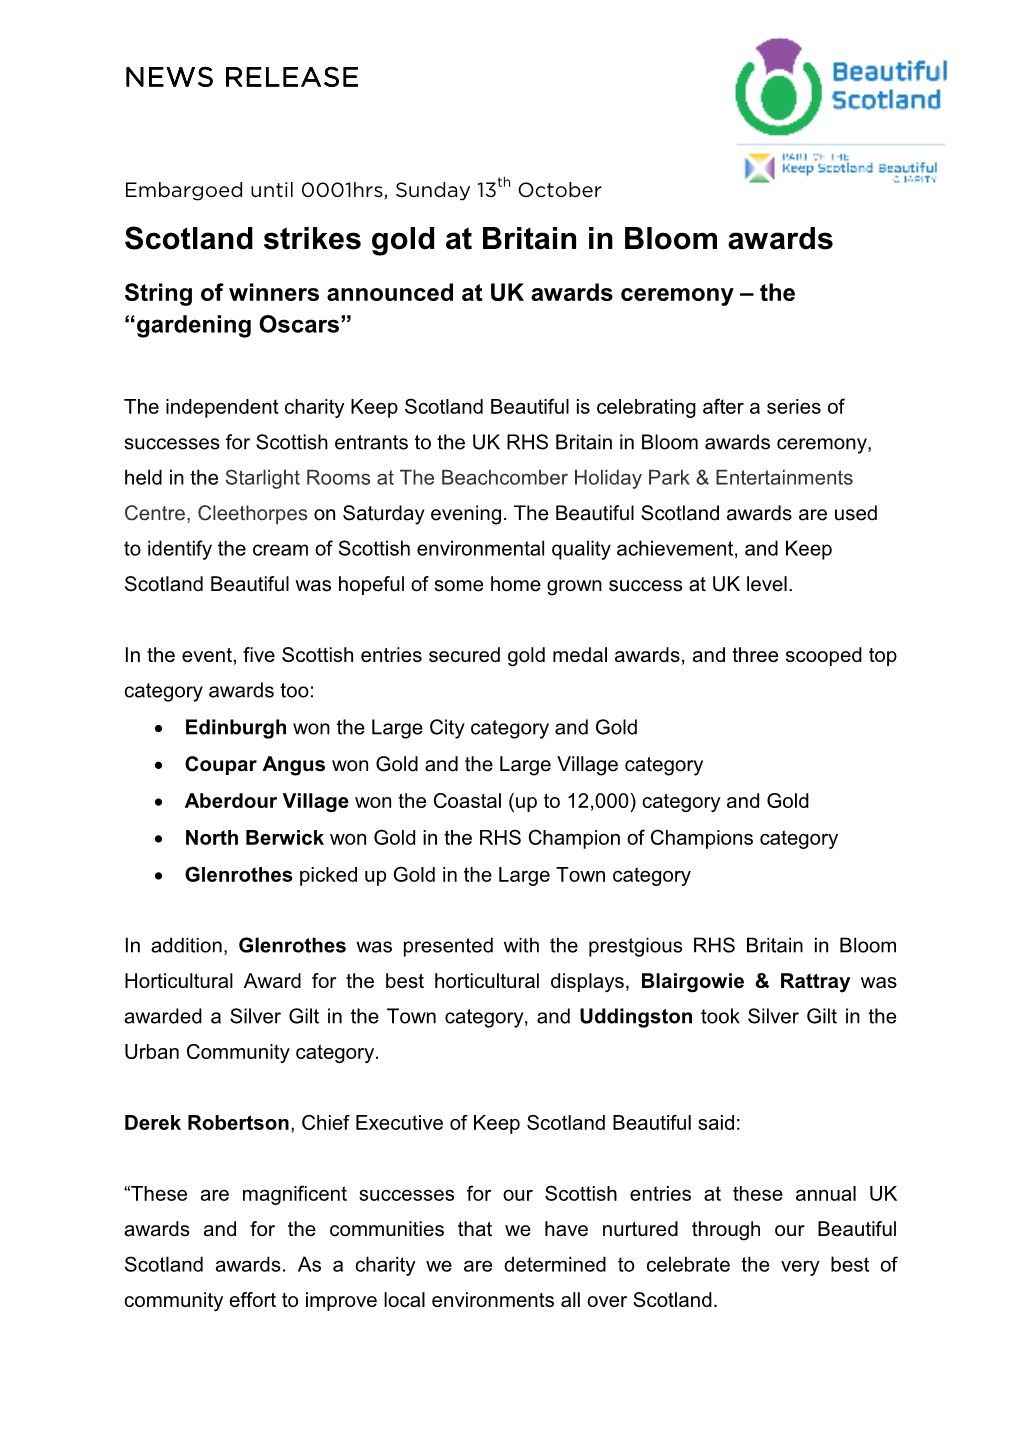 Scotland Strikes Gold at Britain in Bloom Awards